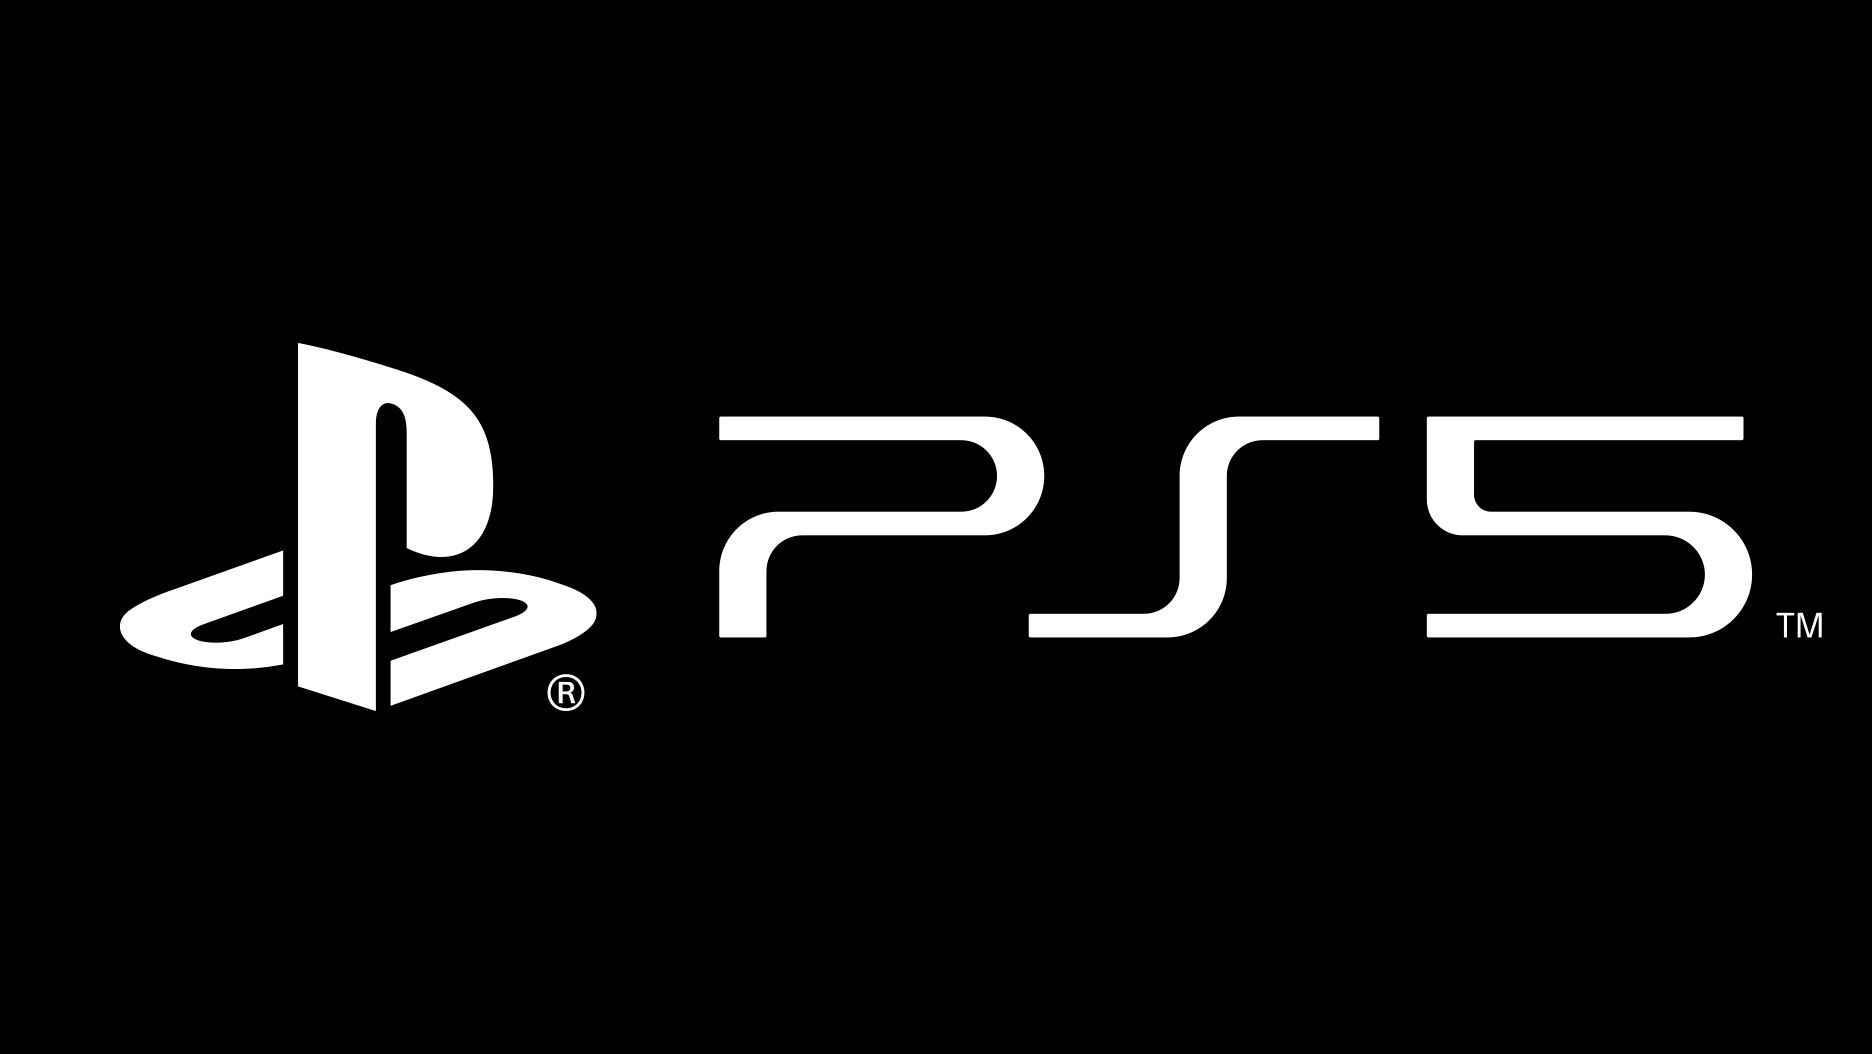 DLC Revolution ps3 psn para COD Black Ops 2 - Donattelo Games - Gift Card  PSN, Jogo de PS3, PS4 e PS5